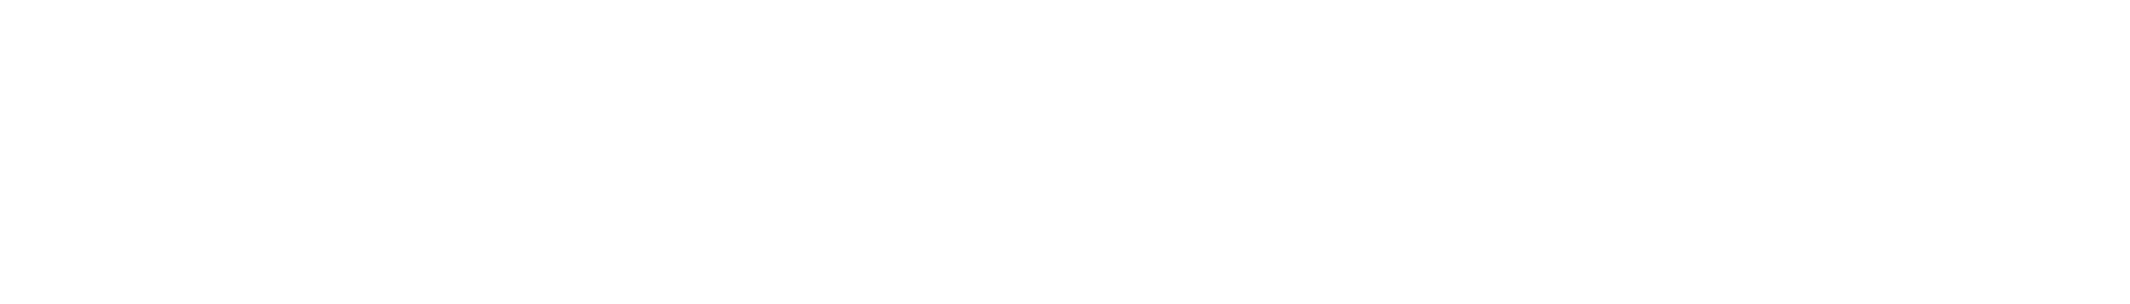 logo holygems white